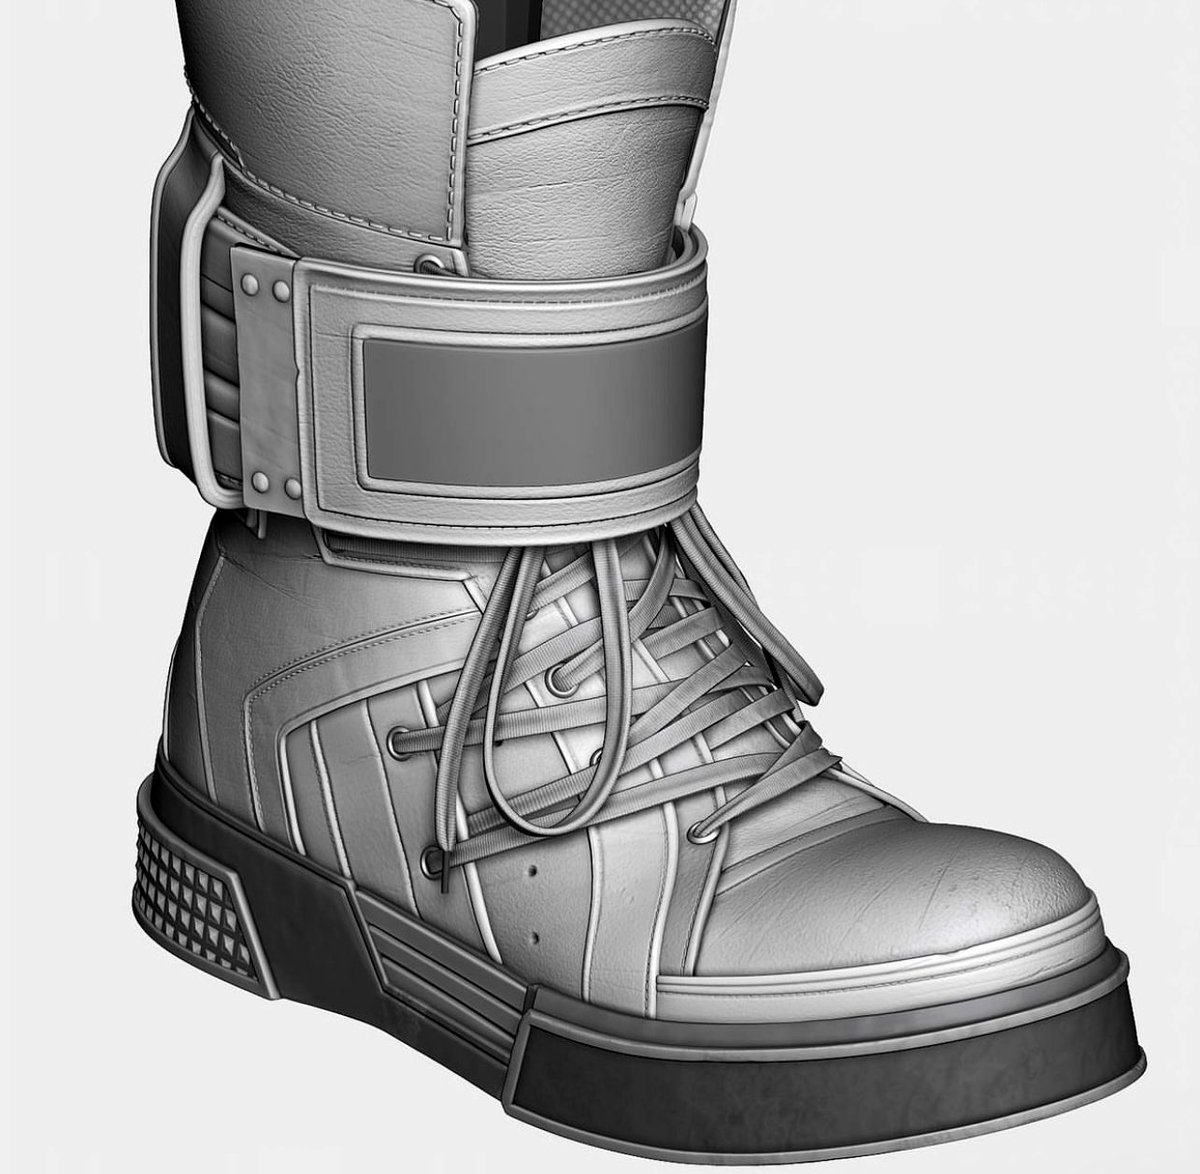 Tifa boots wip

#Tifa_Lockhart #tifa #tifacosplay #TifaLockhart #3dart #zbrush #finalfantasy7remake